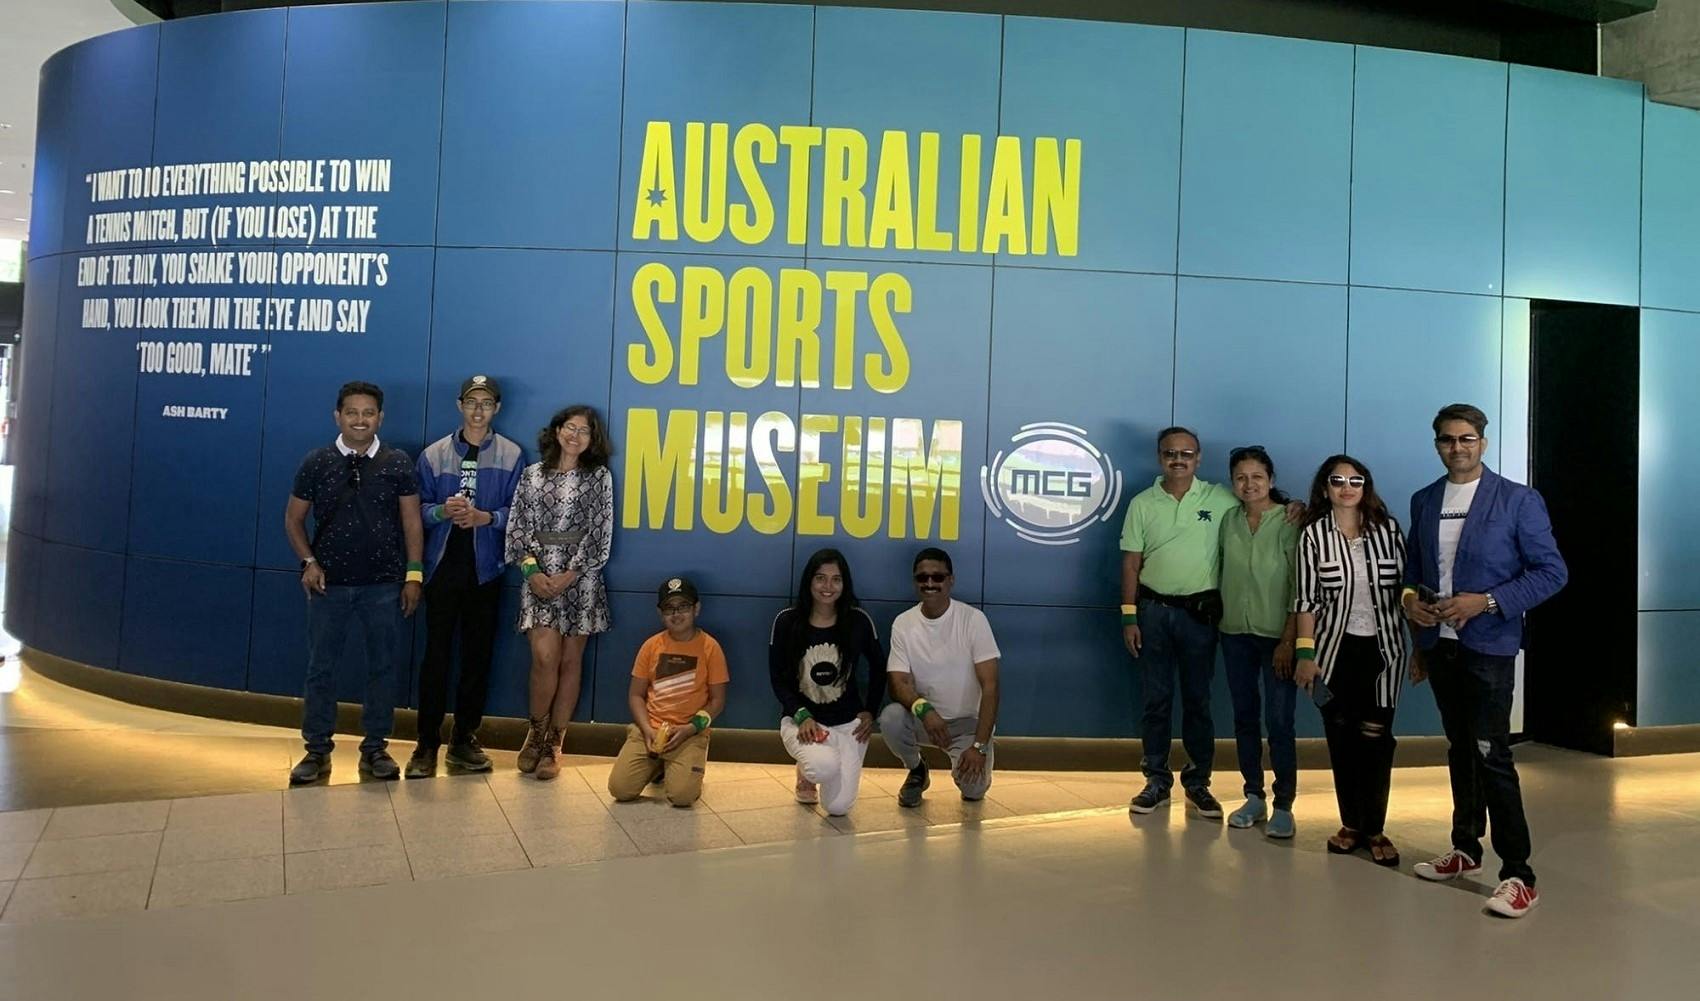 Melbourne sports precinct tour & Australian Sports Museum